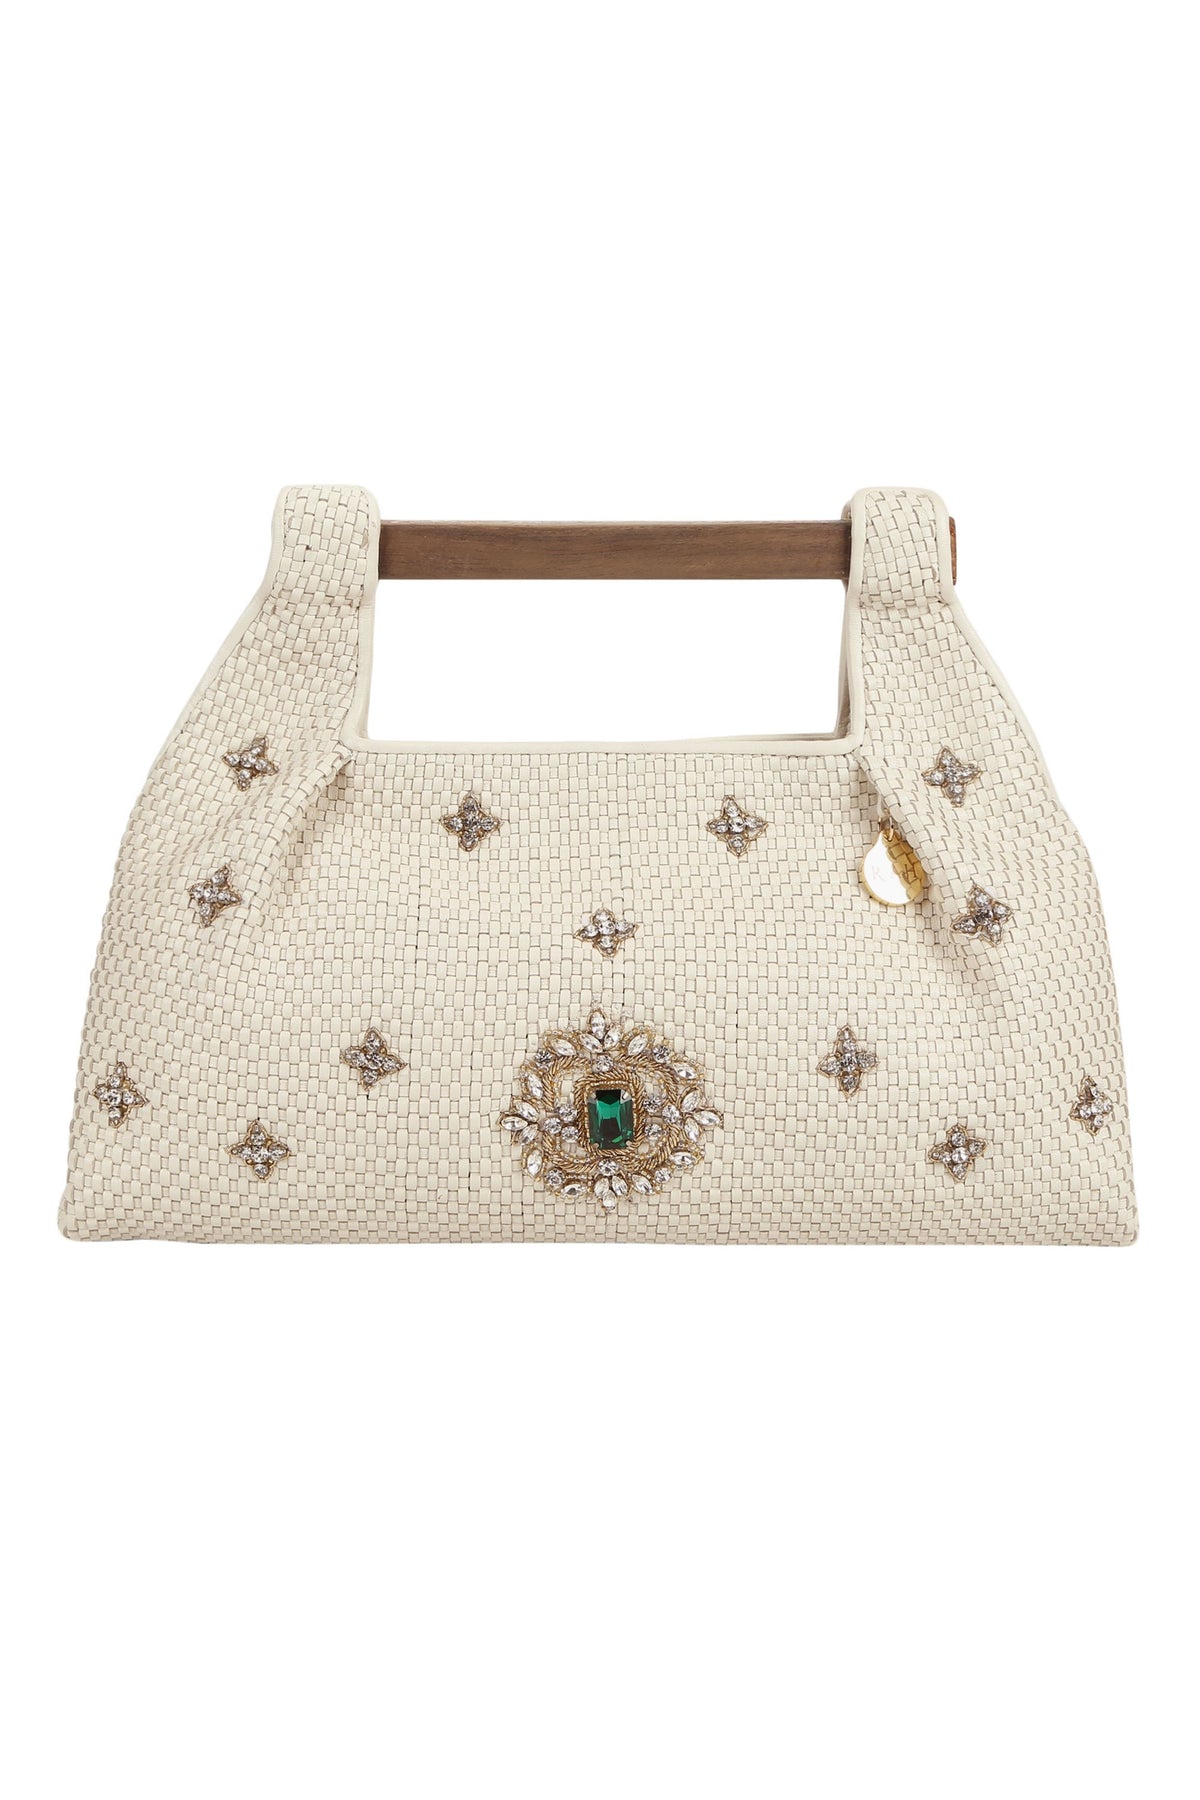 Nafisa Embellished Handheld Bag